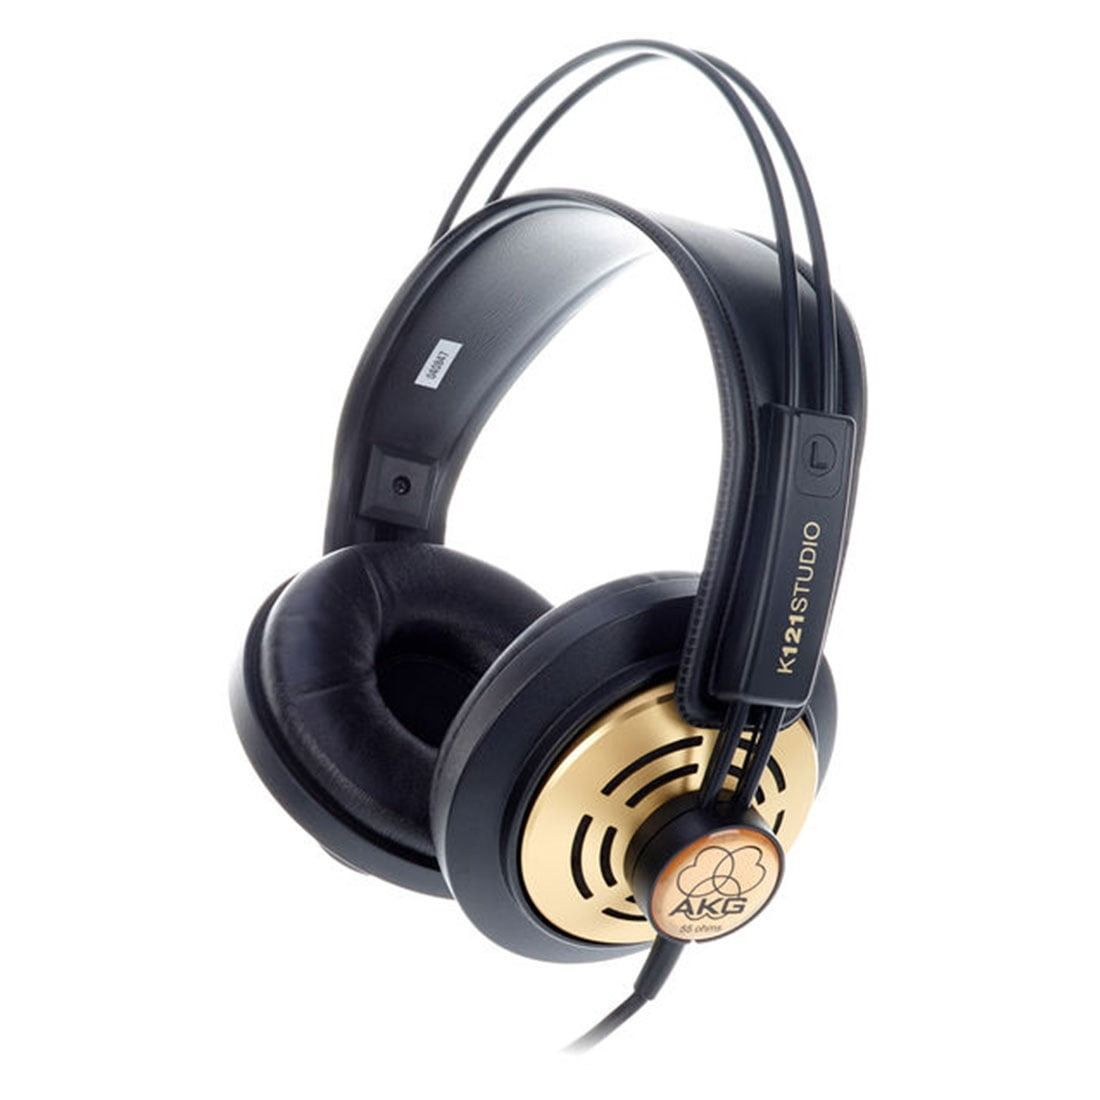  AKG K121 High-performance studio headphones 